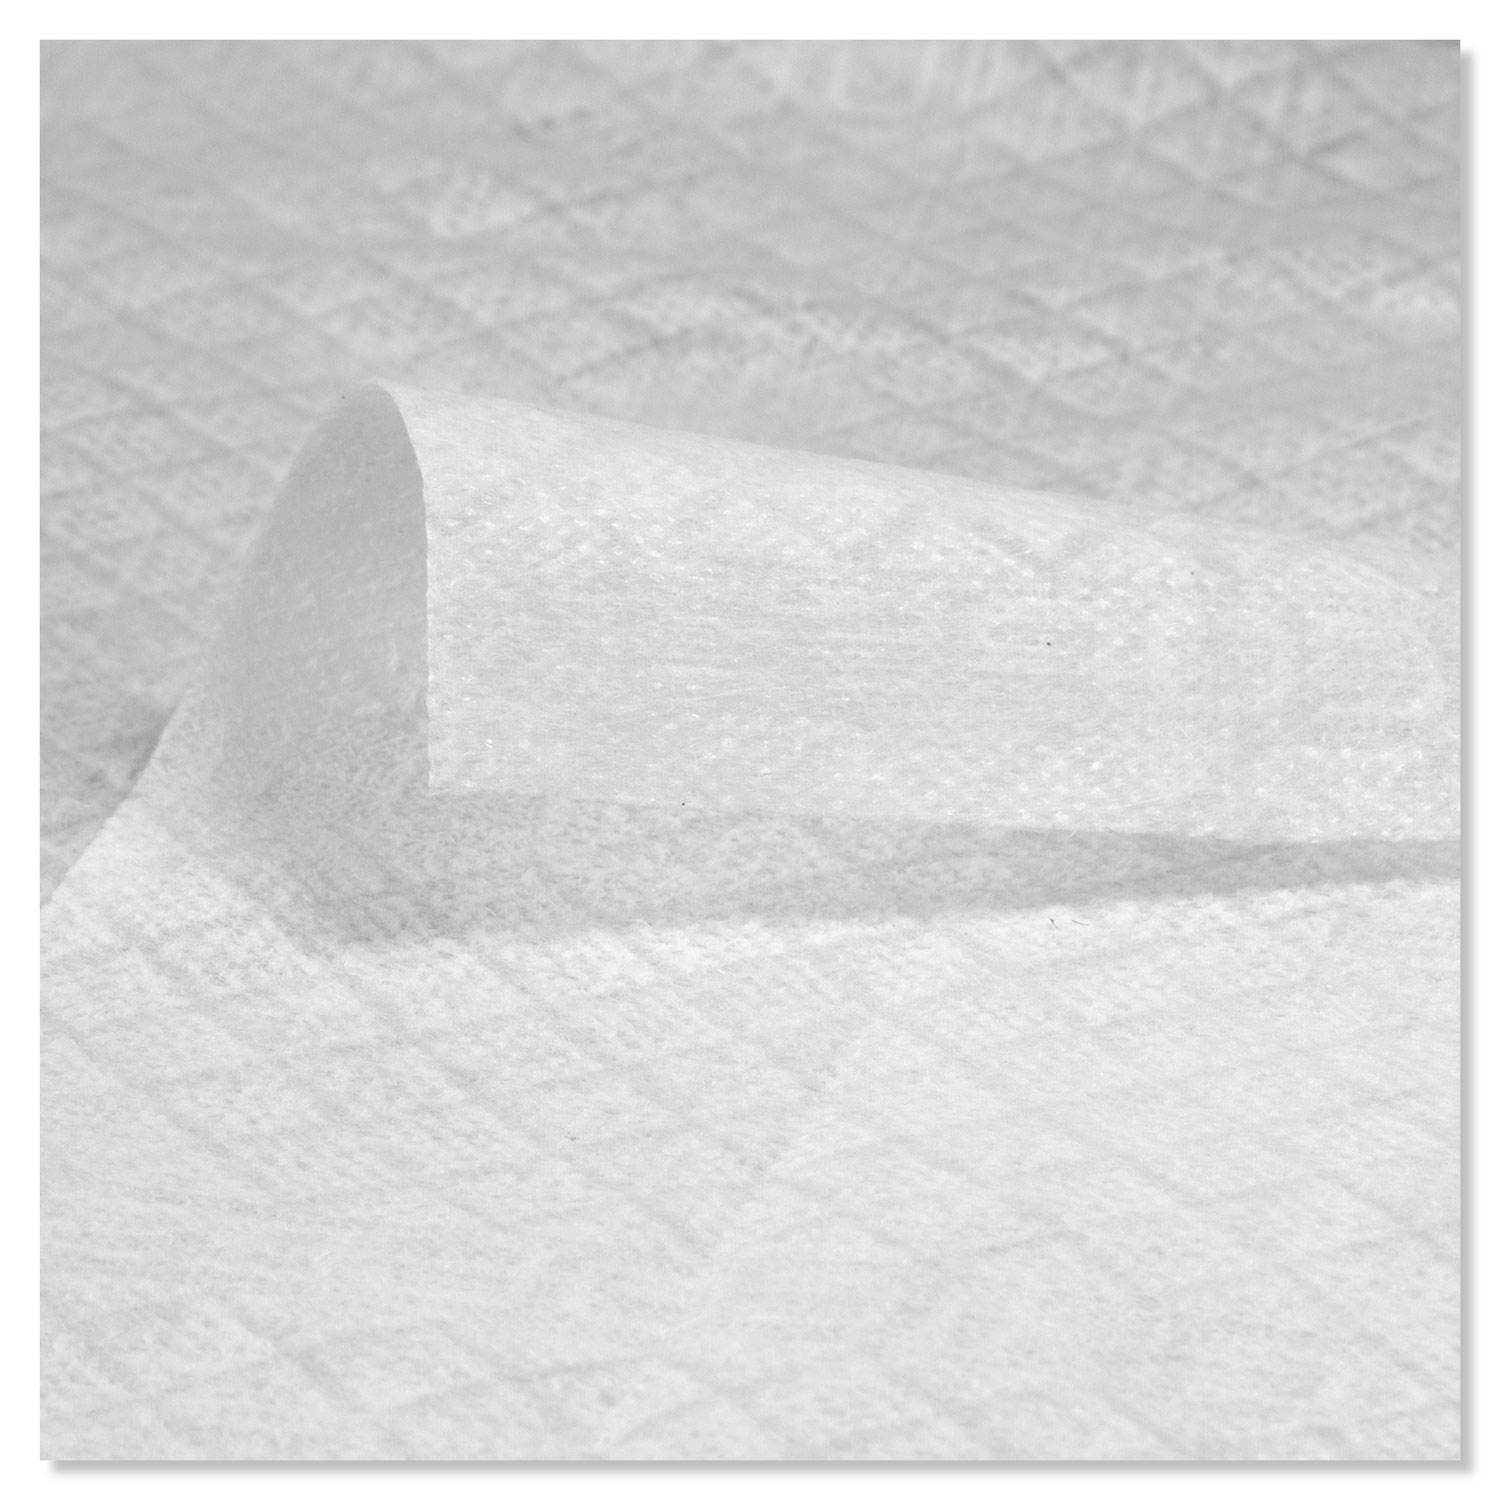  Chicopee D733W Durawipe Medium-Duty Industrial Wipers, 13.1 x 12.6, White, 650/Roll (CHID733W) 